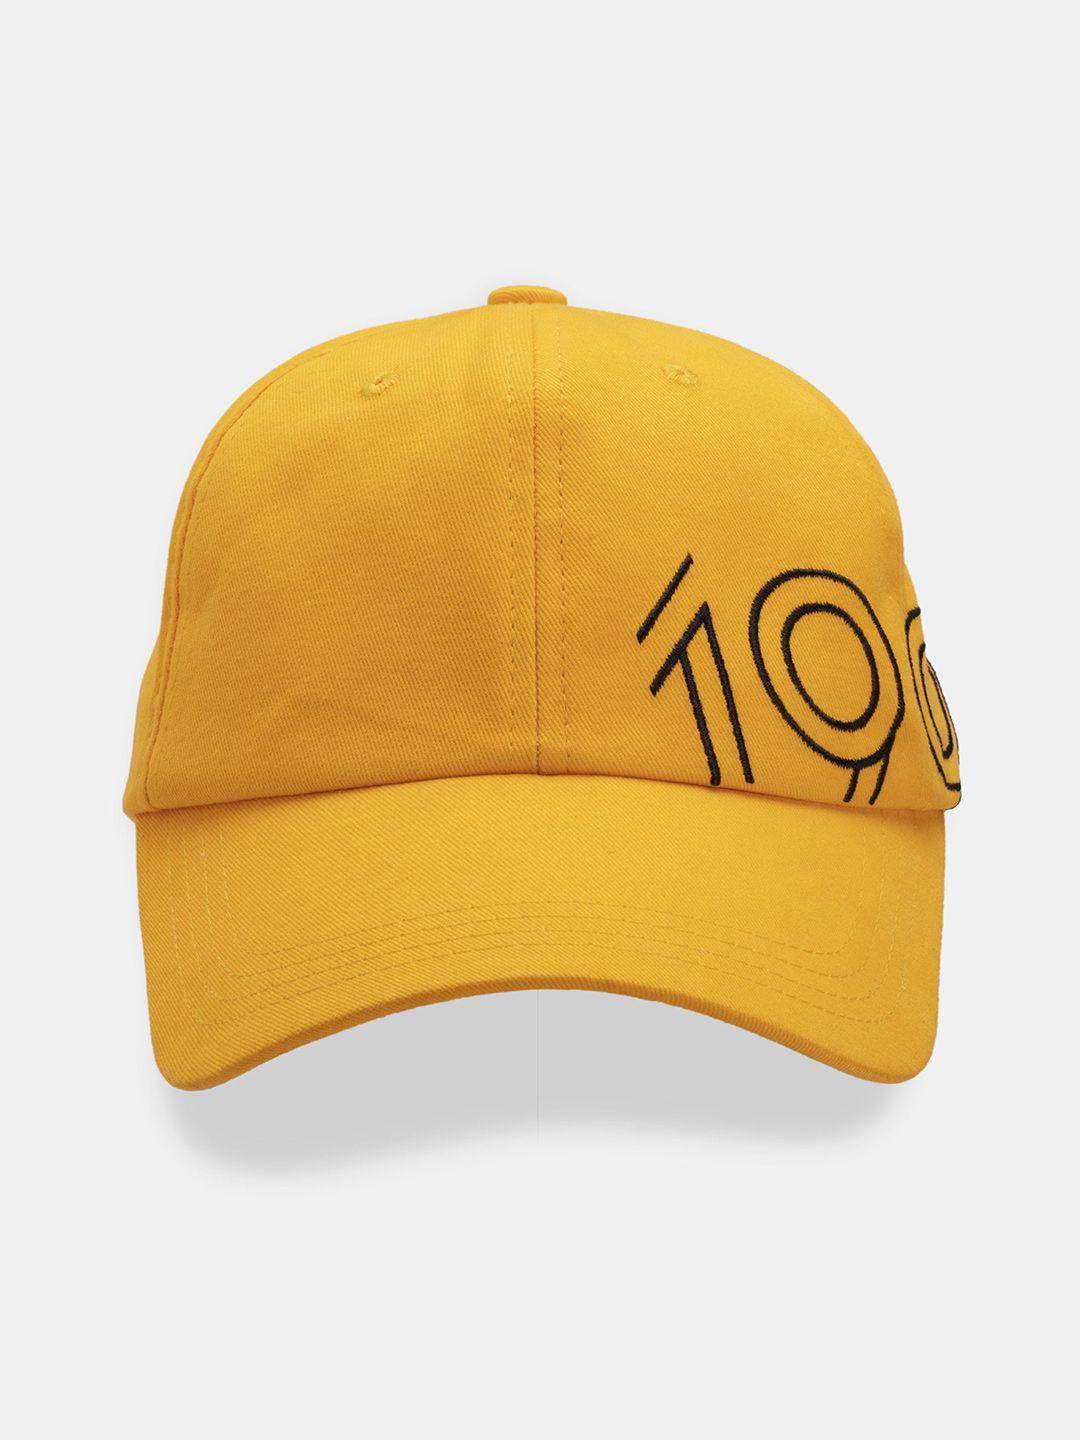 status quo men yellow & black embroidered baseball cap